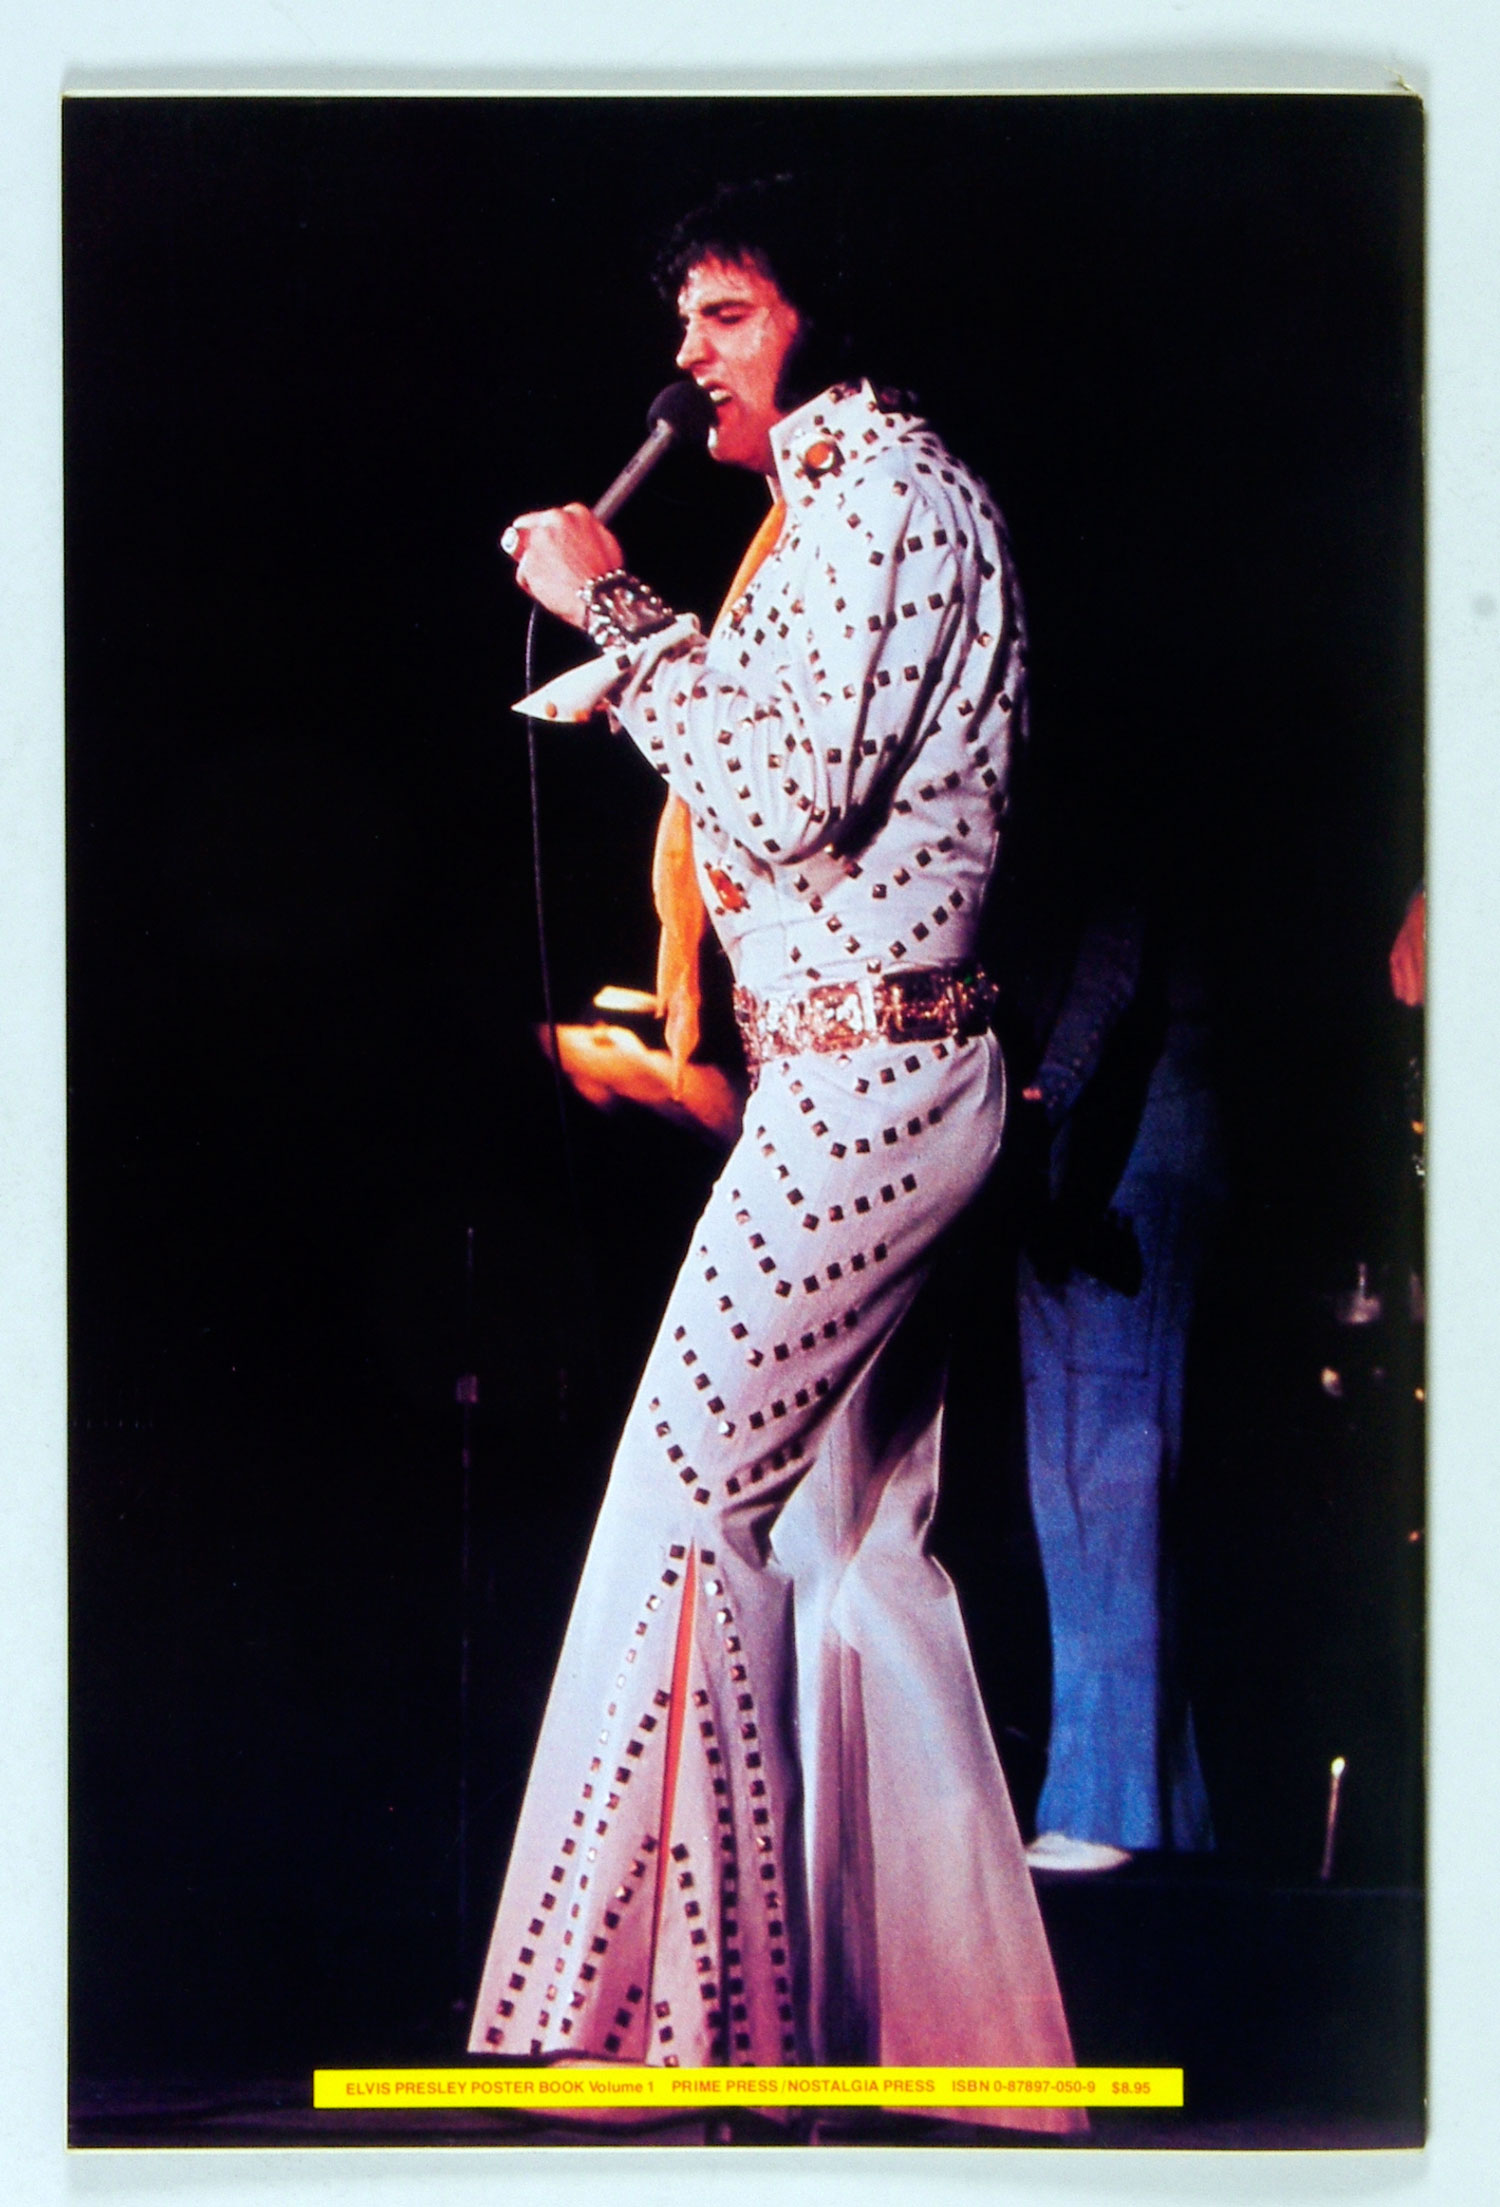 Elvis Presley Poster Book 1977 Vol. 1 Special Collector's Edition 22 Posters